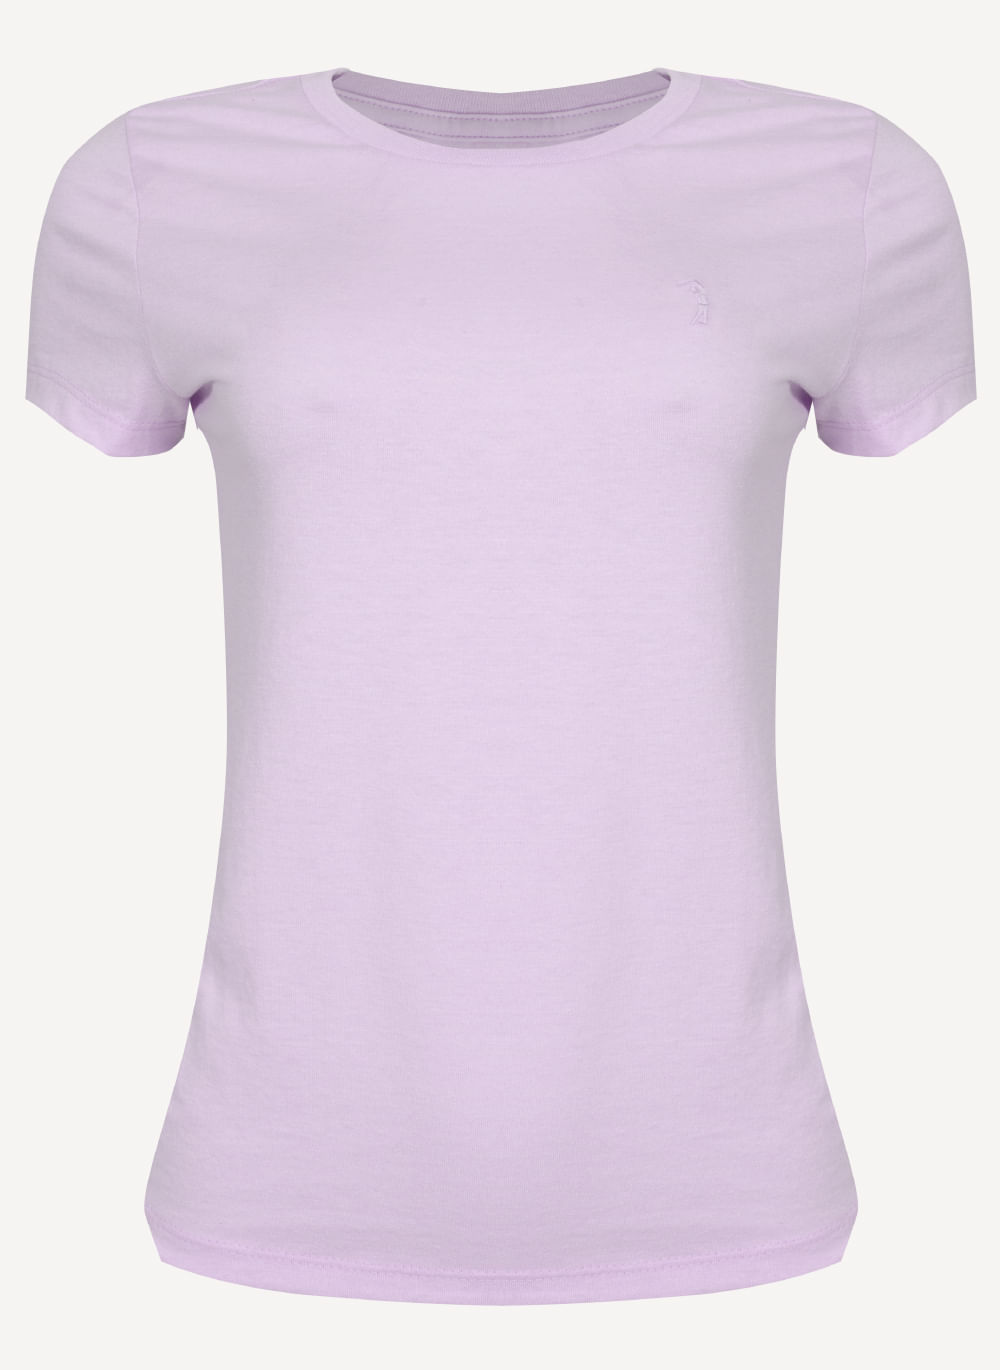 Camiseta-Feminina-Aleatory-Basica-Gola-Careca-Lilas-Lilas-GG